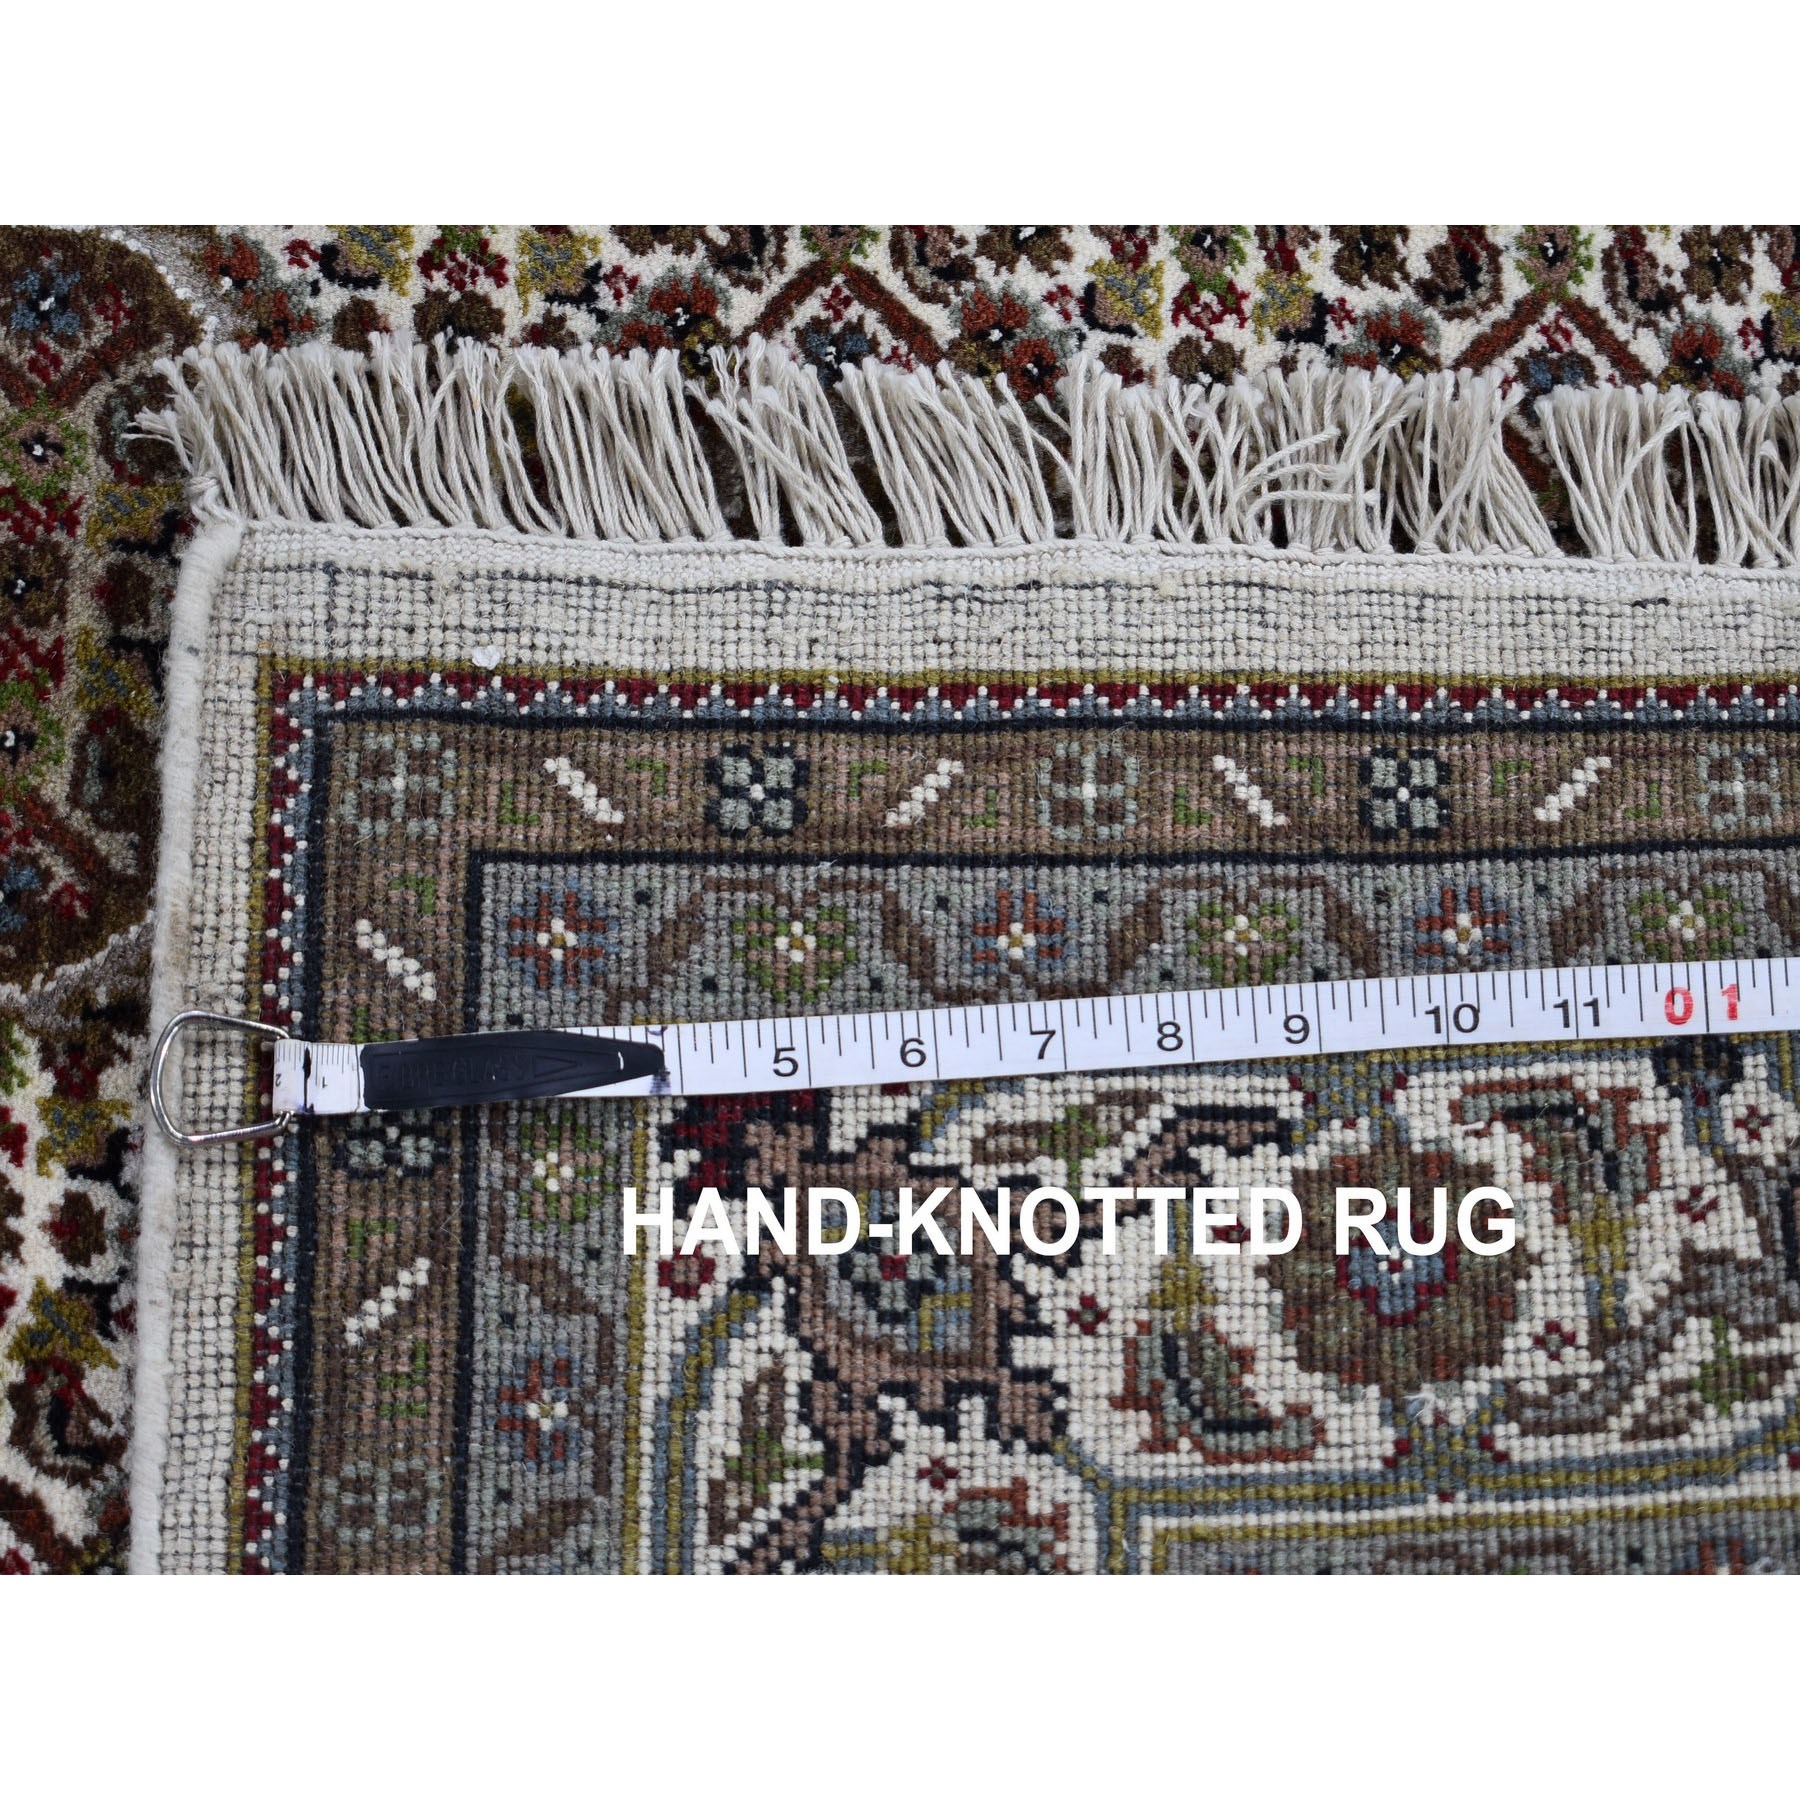 4-7 x6-9  Ivory Wool And Silk Tabriz Mahi Design Hand Knotted Oriental Rug 